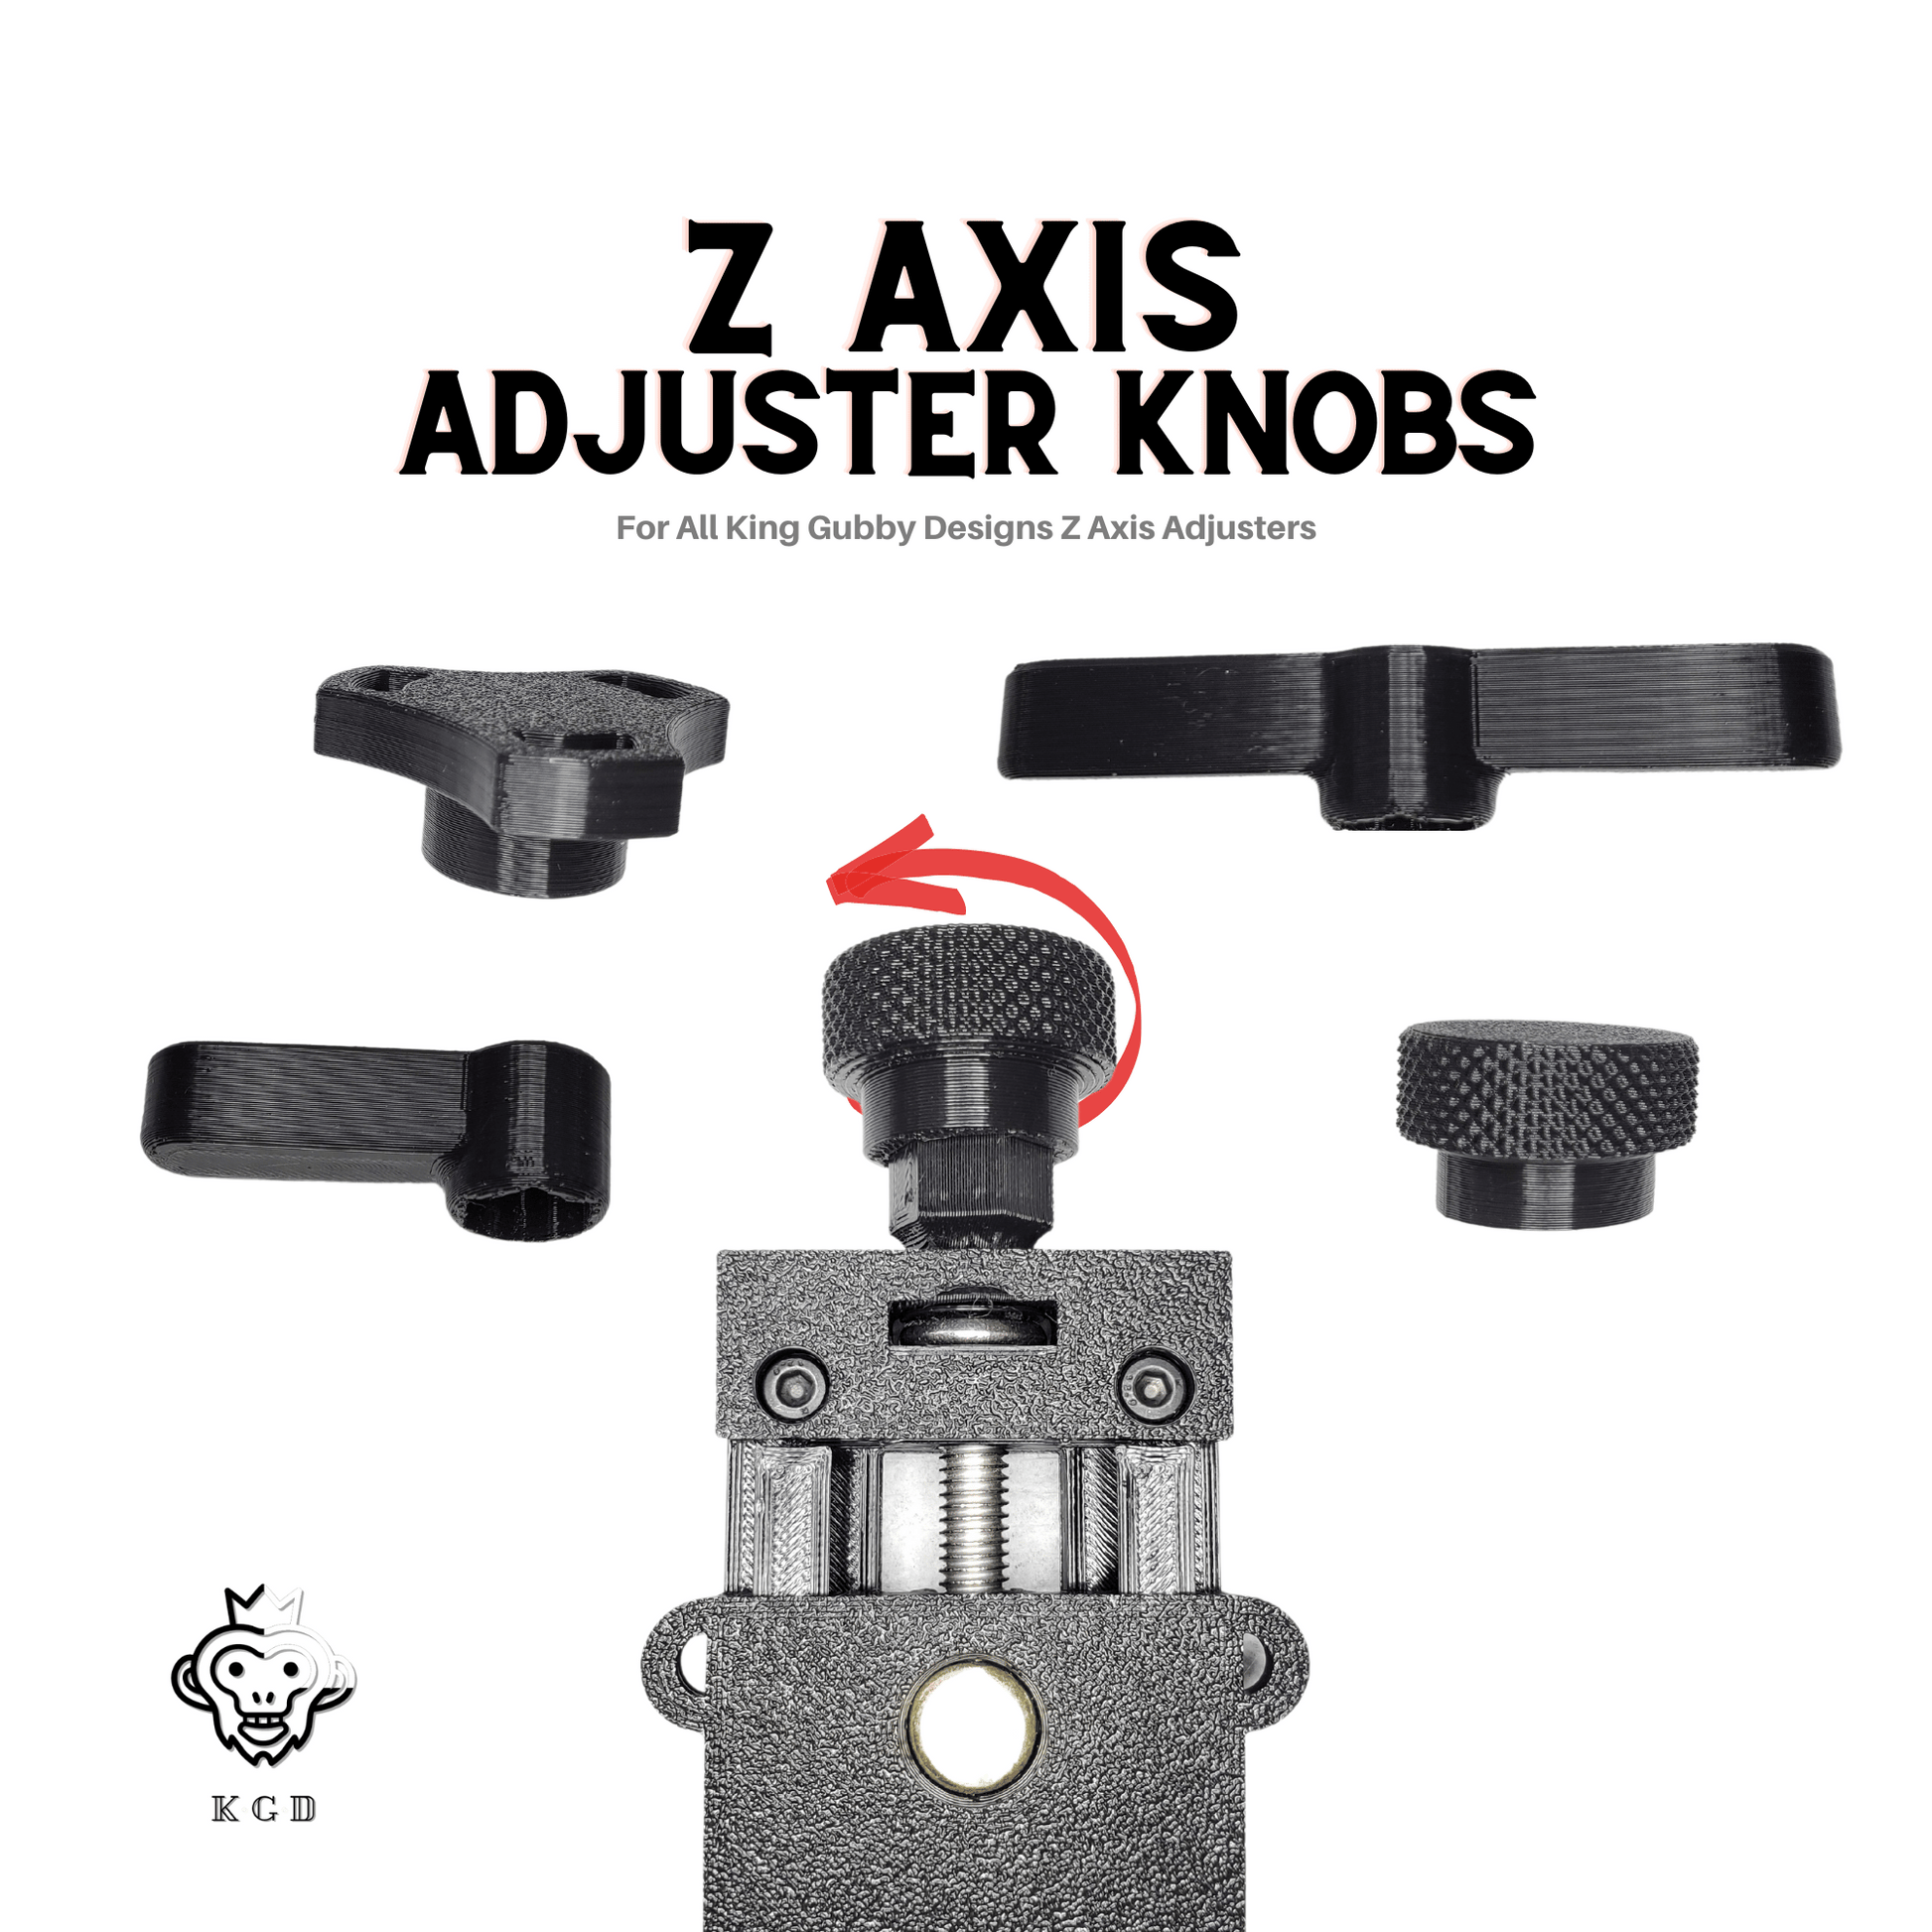 Sculpfun S30 Z Axis Adjuster – King Gubby